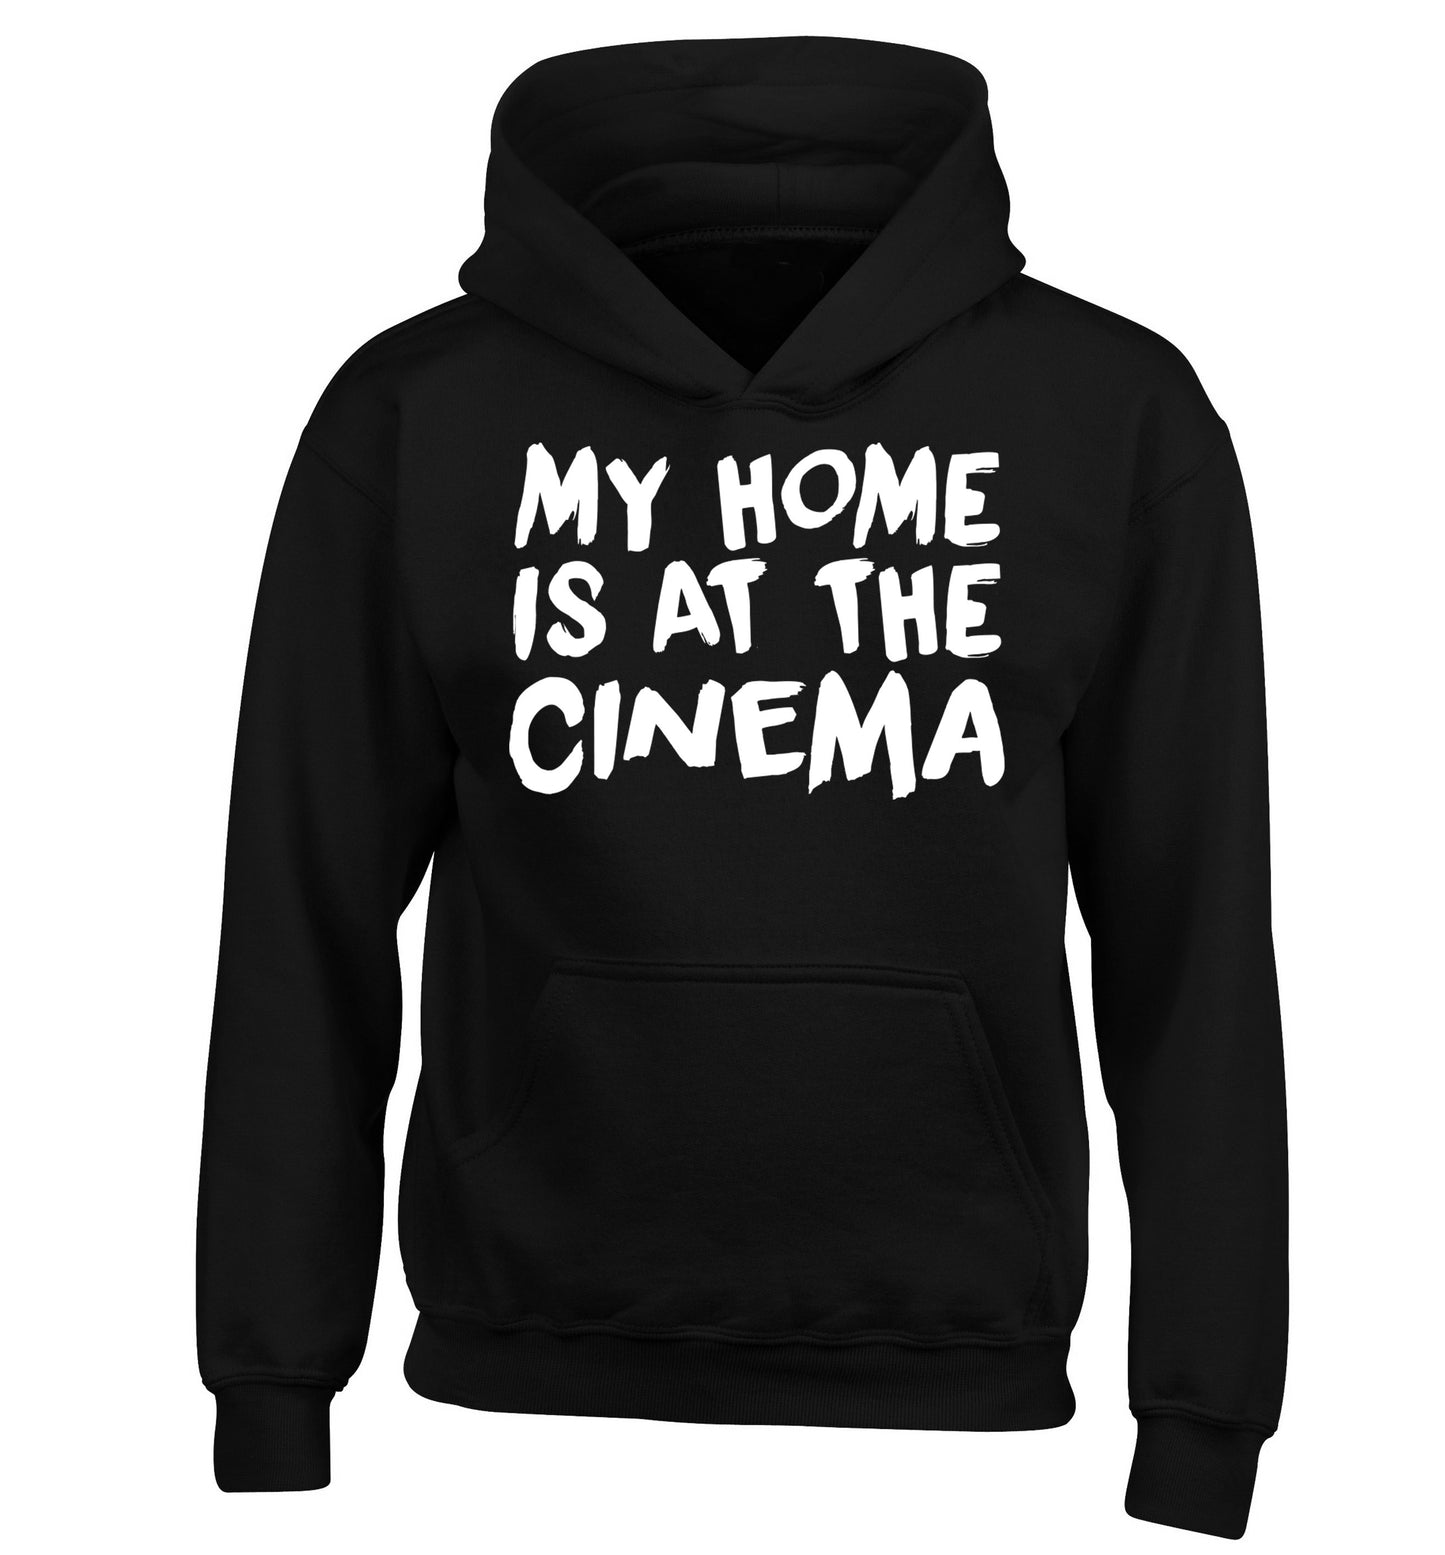 My home is at the cinema children's black hoodie 12-14 Years